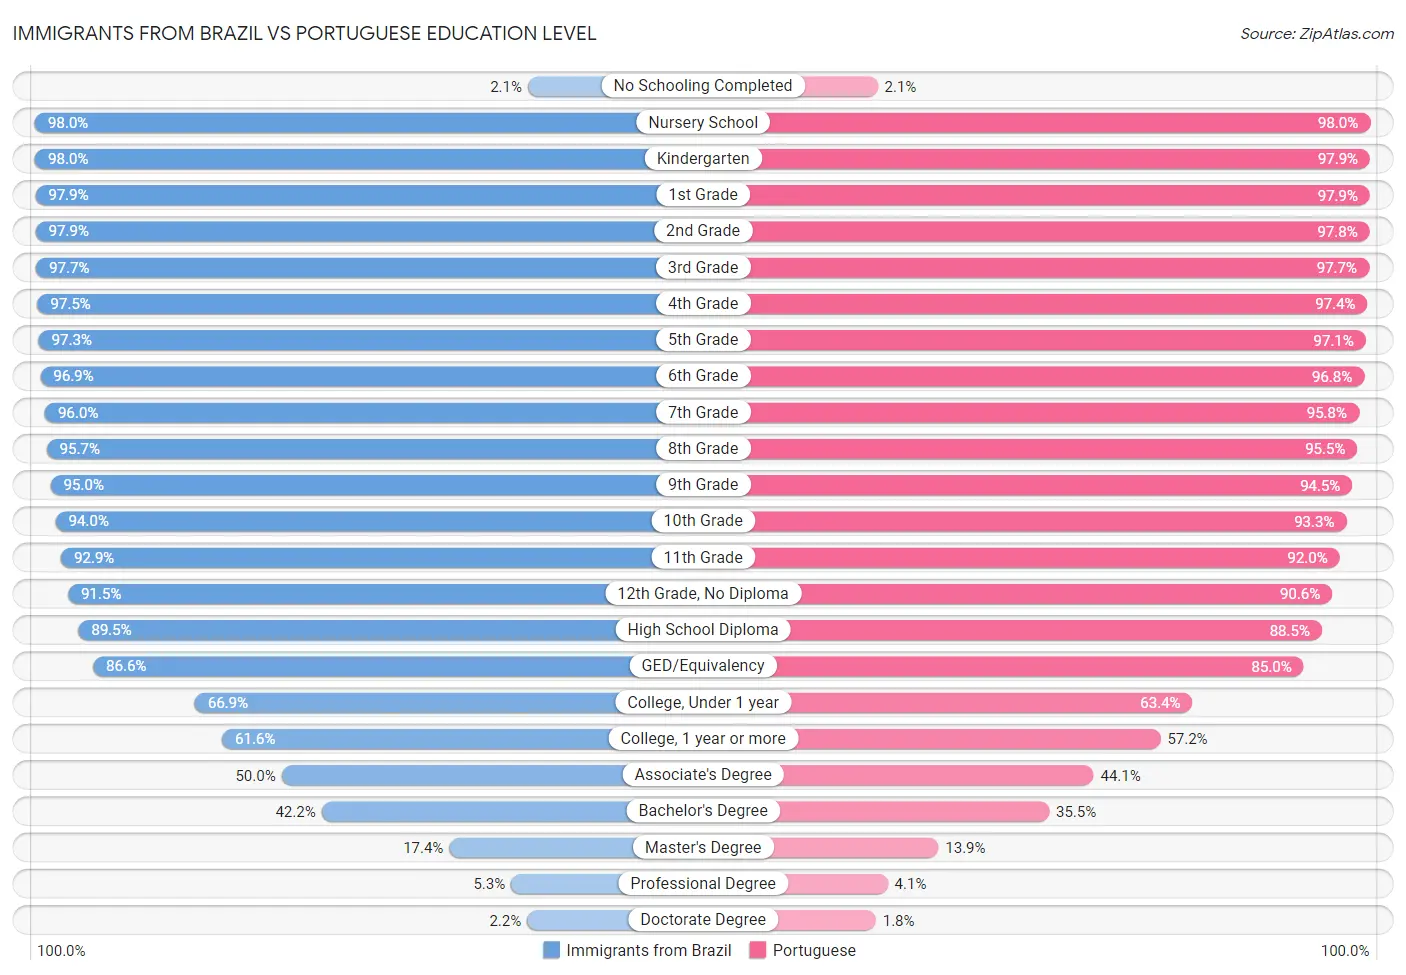 Immigrants from Brazil vs Portuguese Education Level